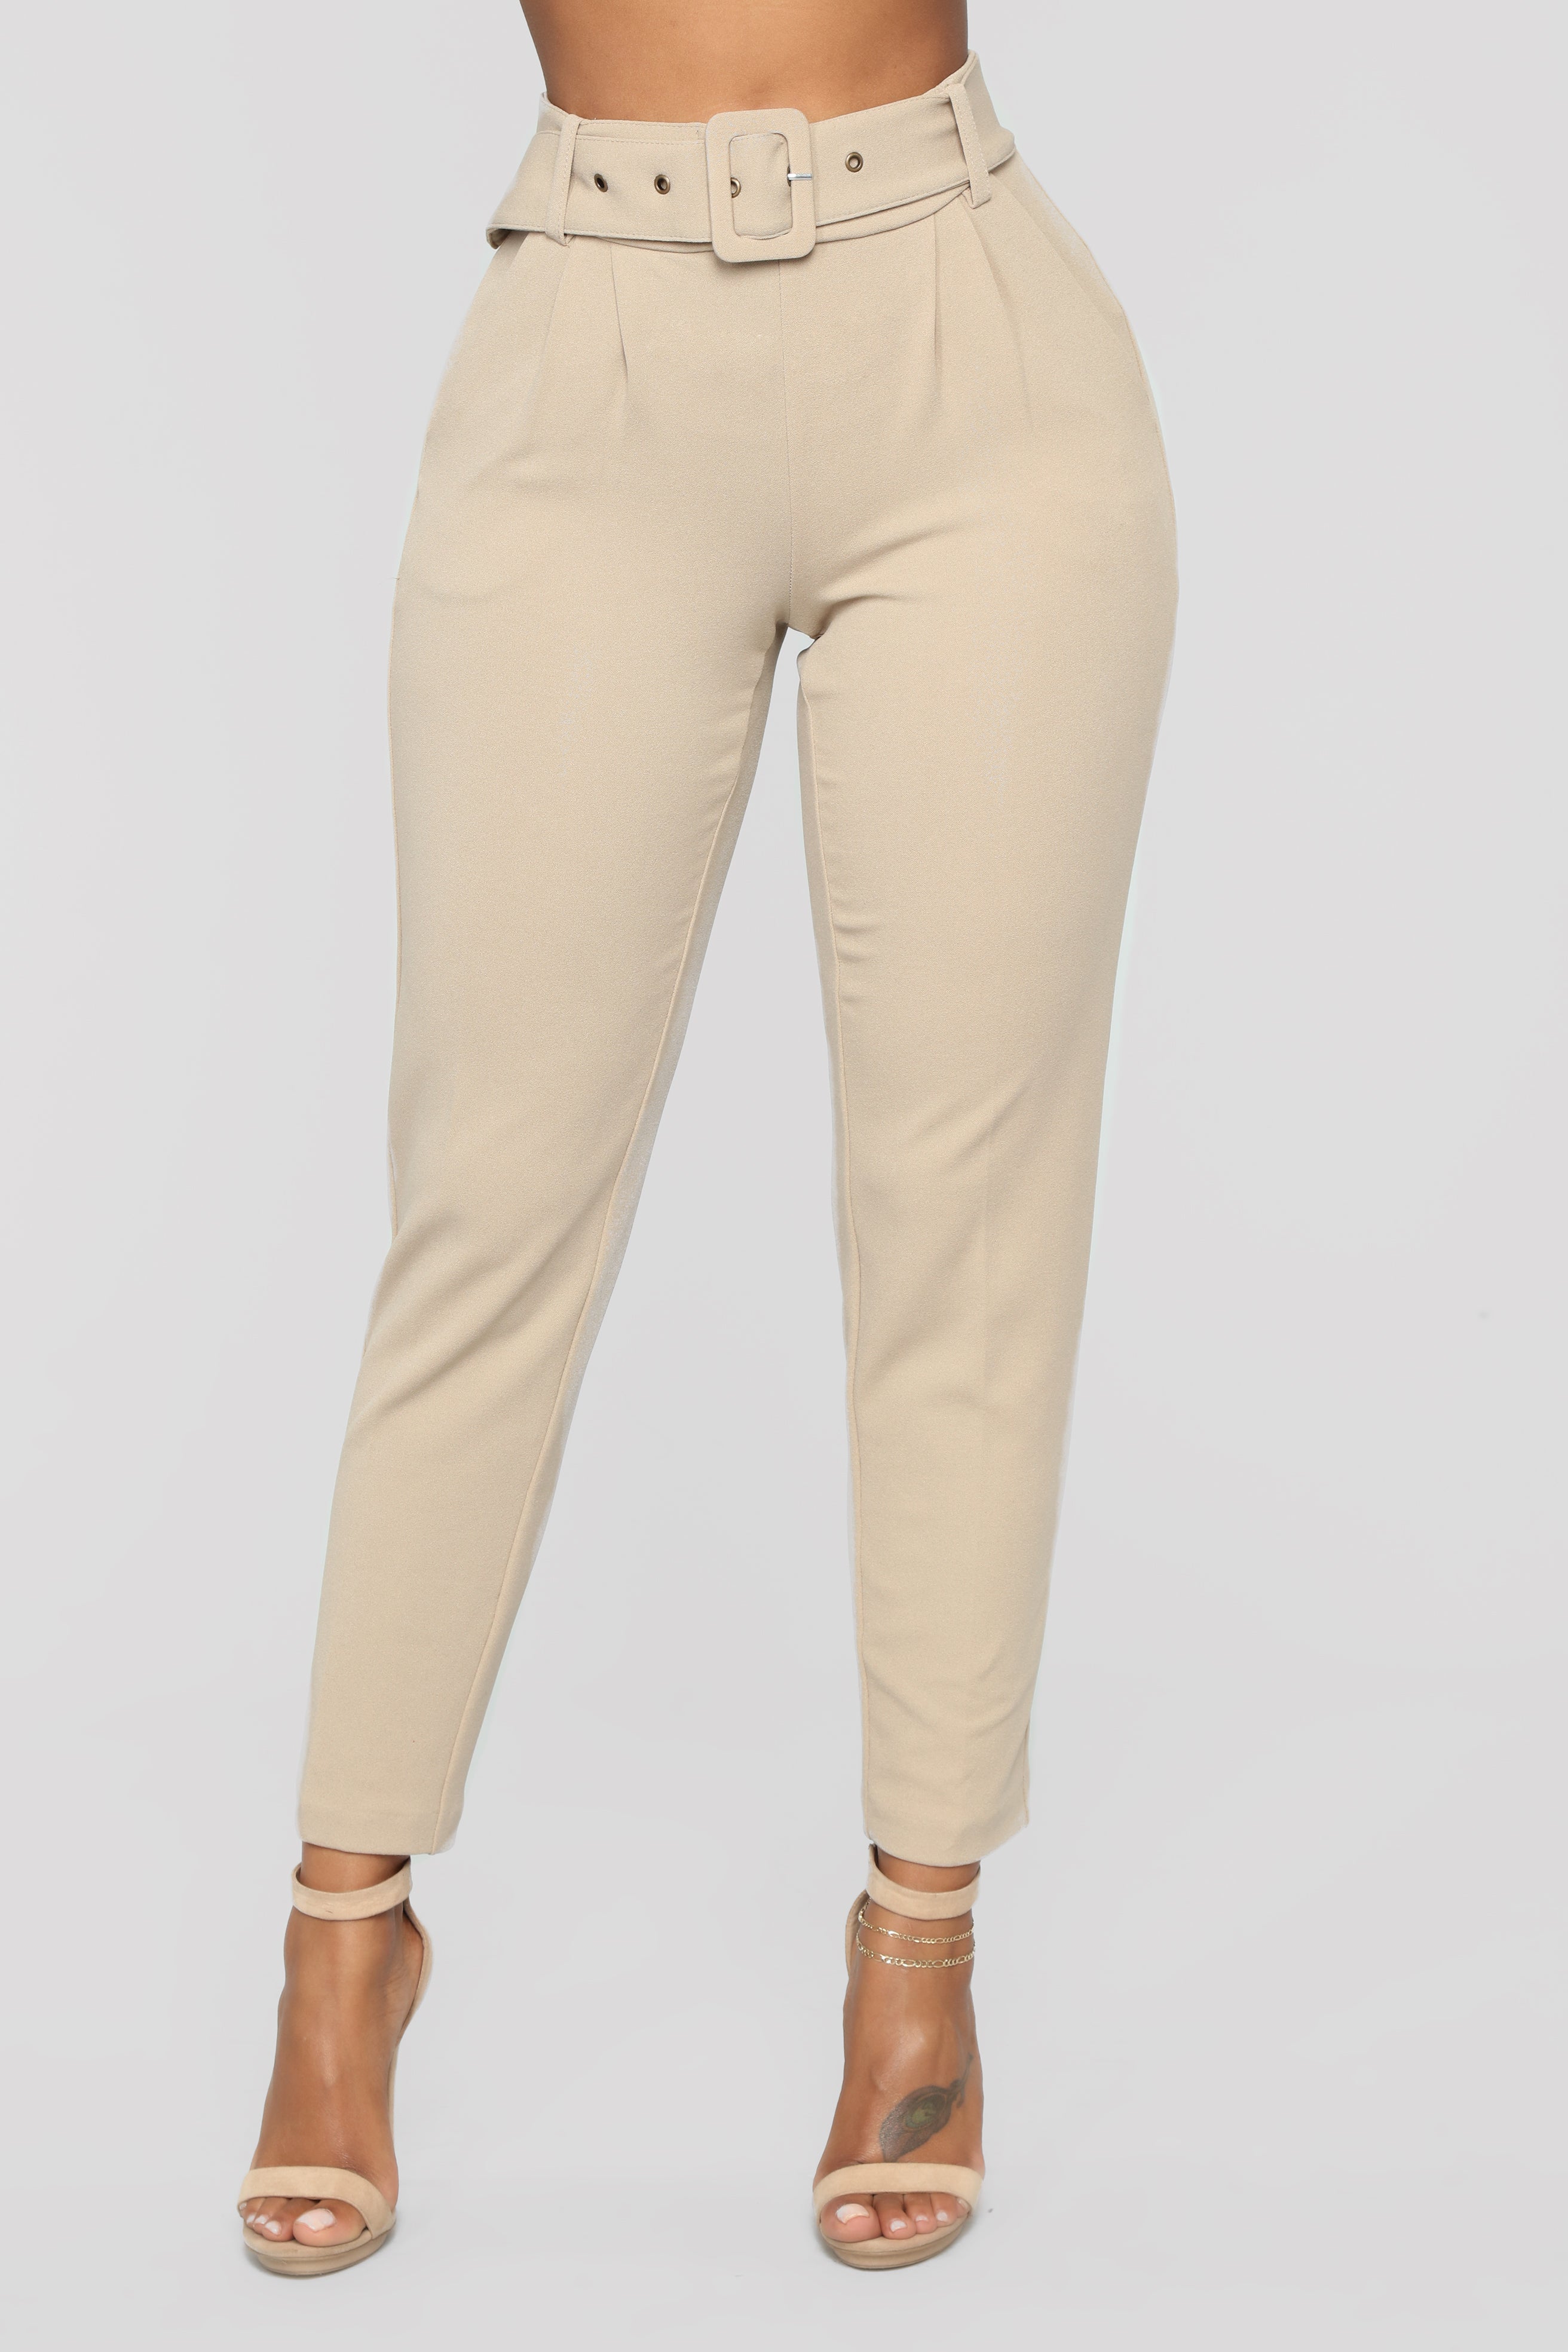 Olivia Belted Trouser - Chocolate, Fashion Nova, Pants